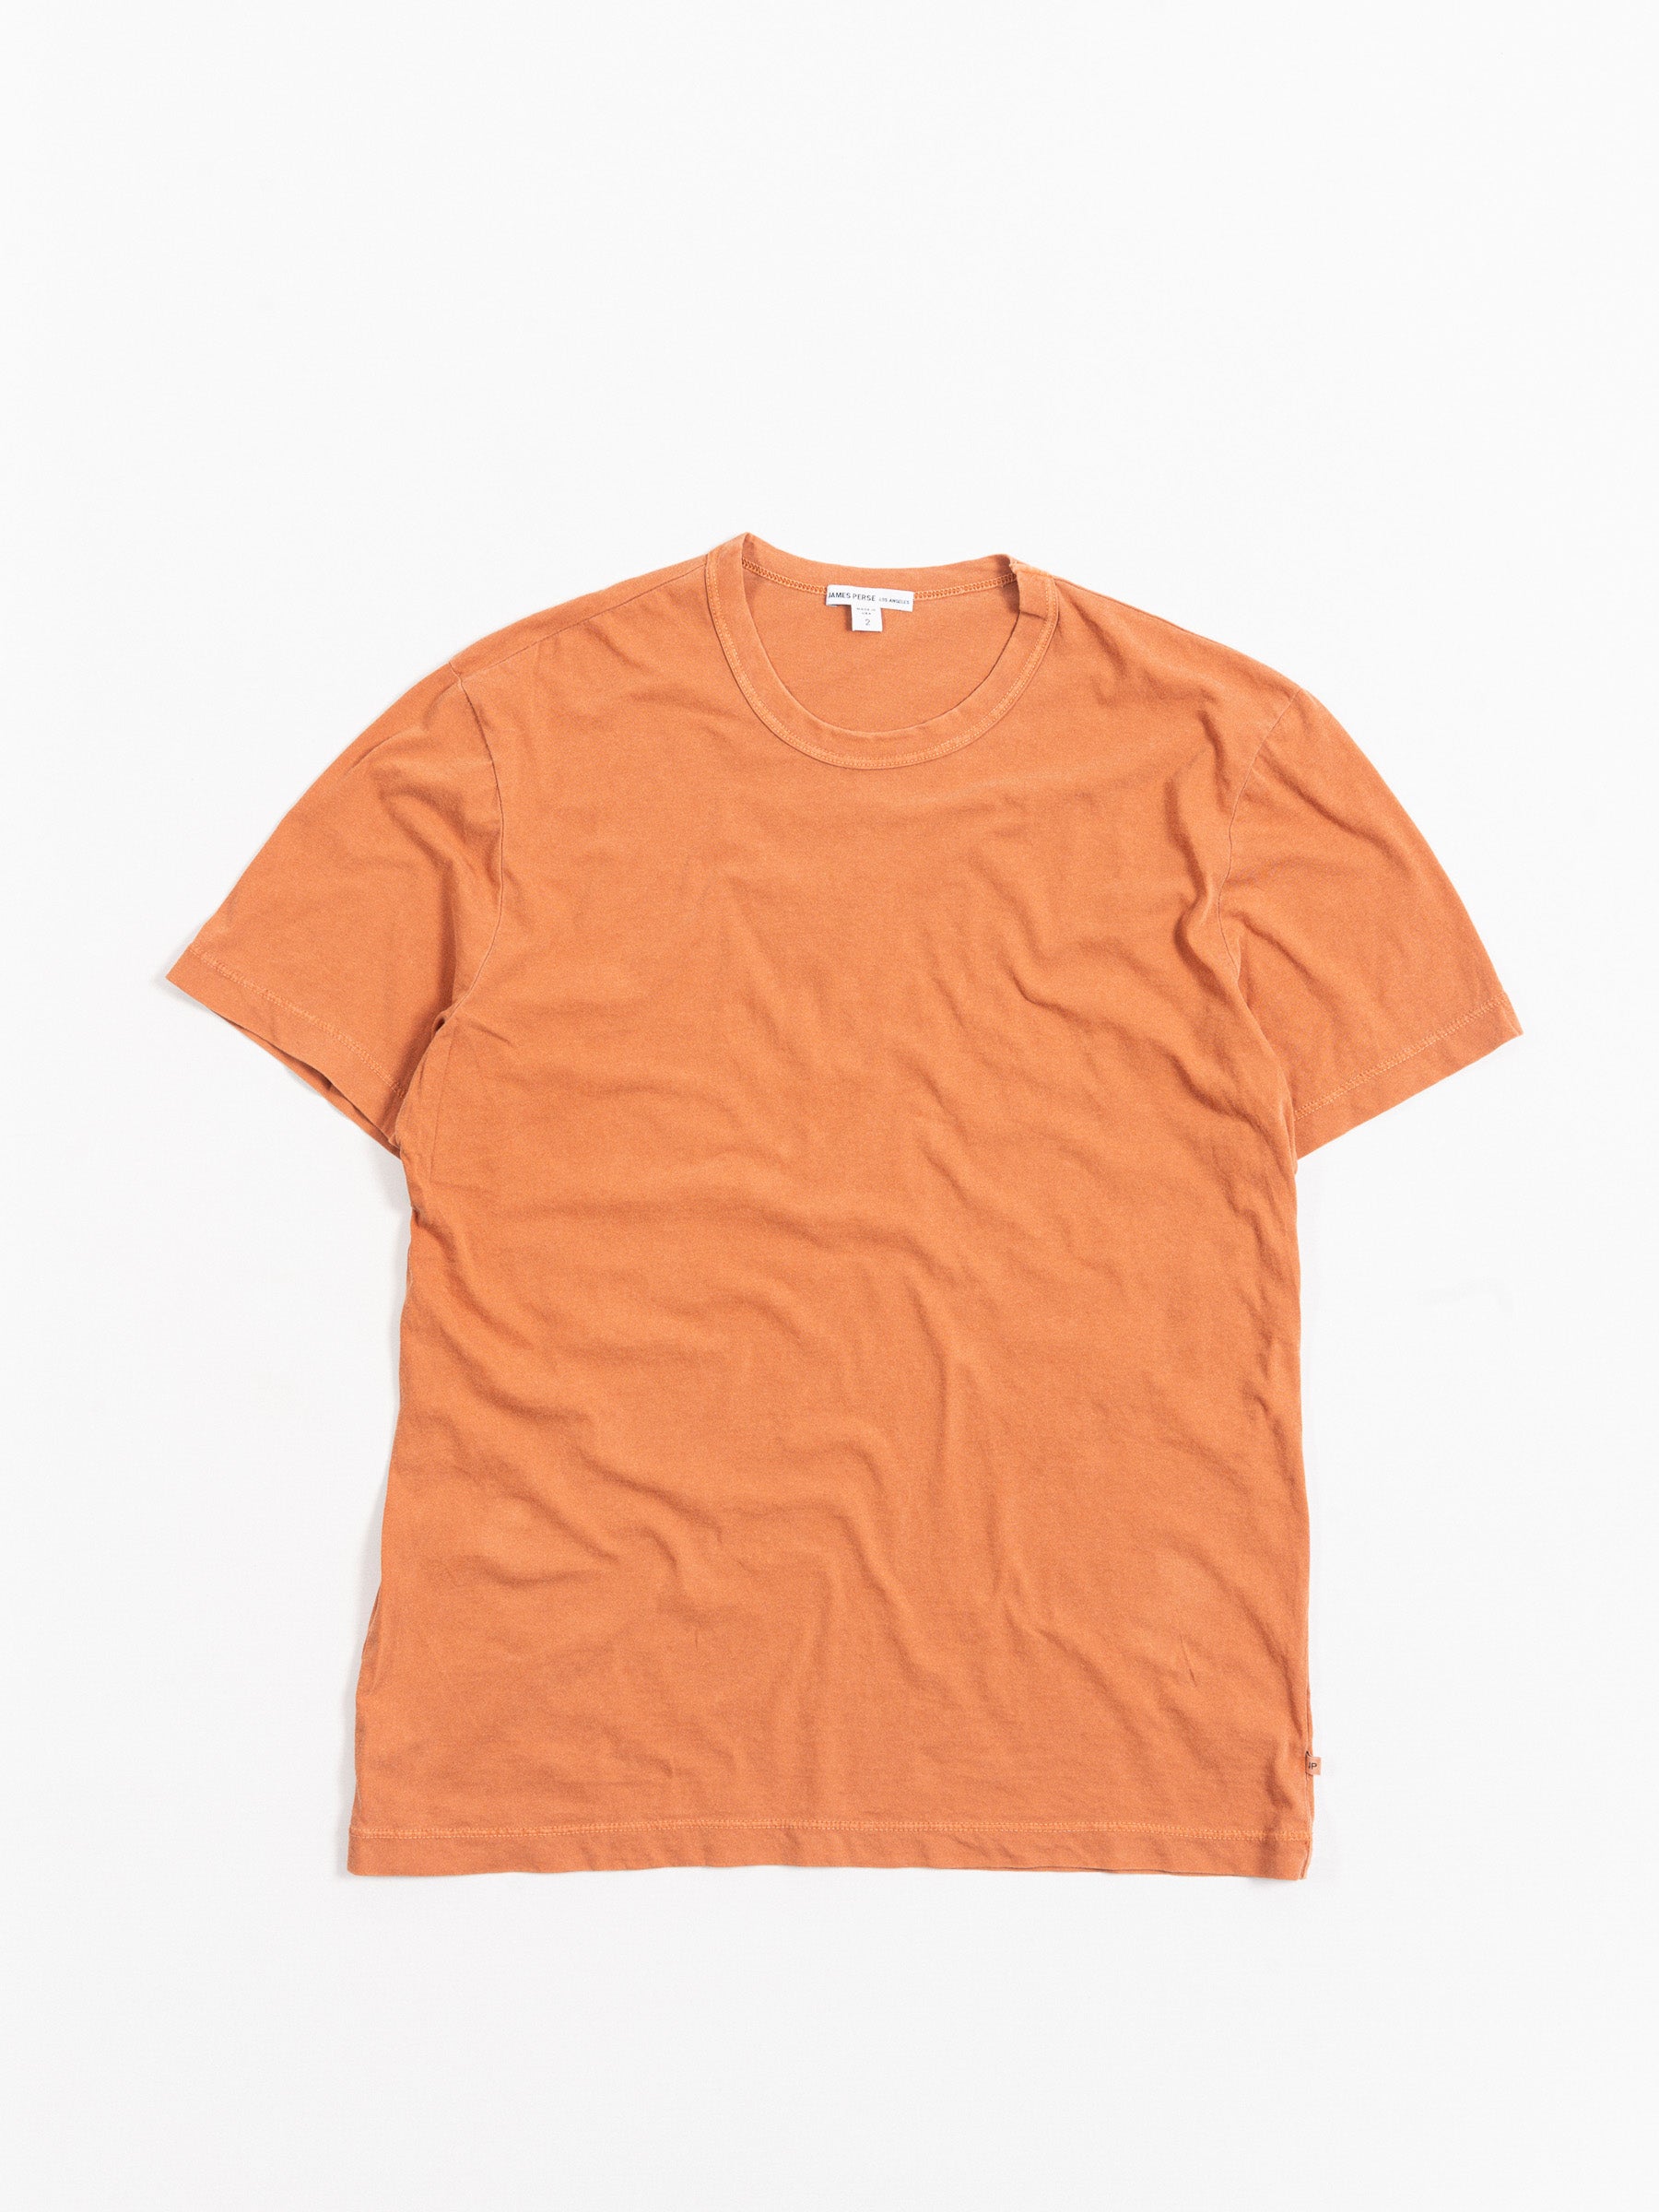 S/S Crew T-Shirt Orange